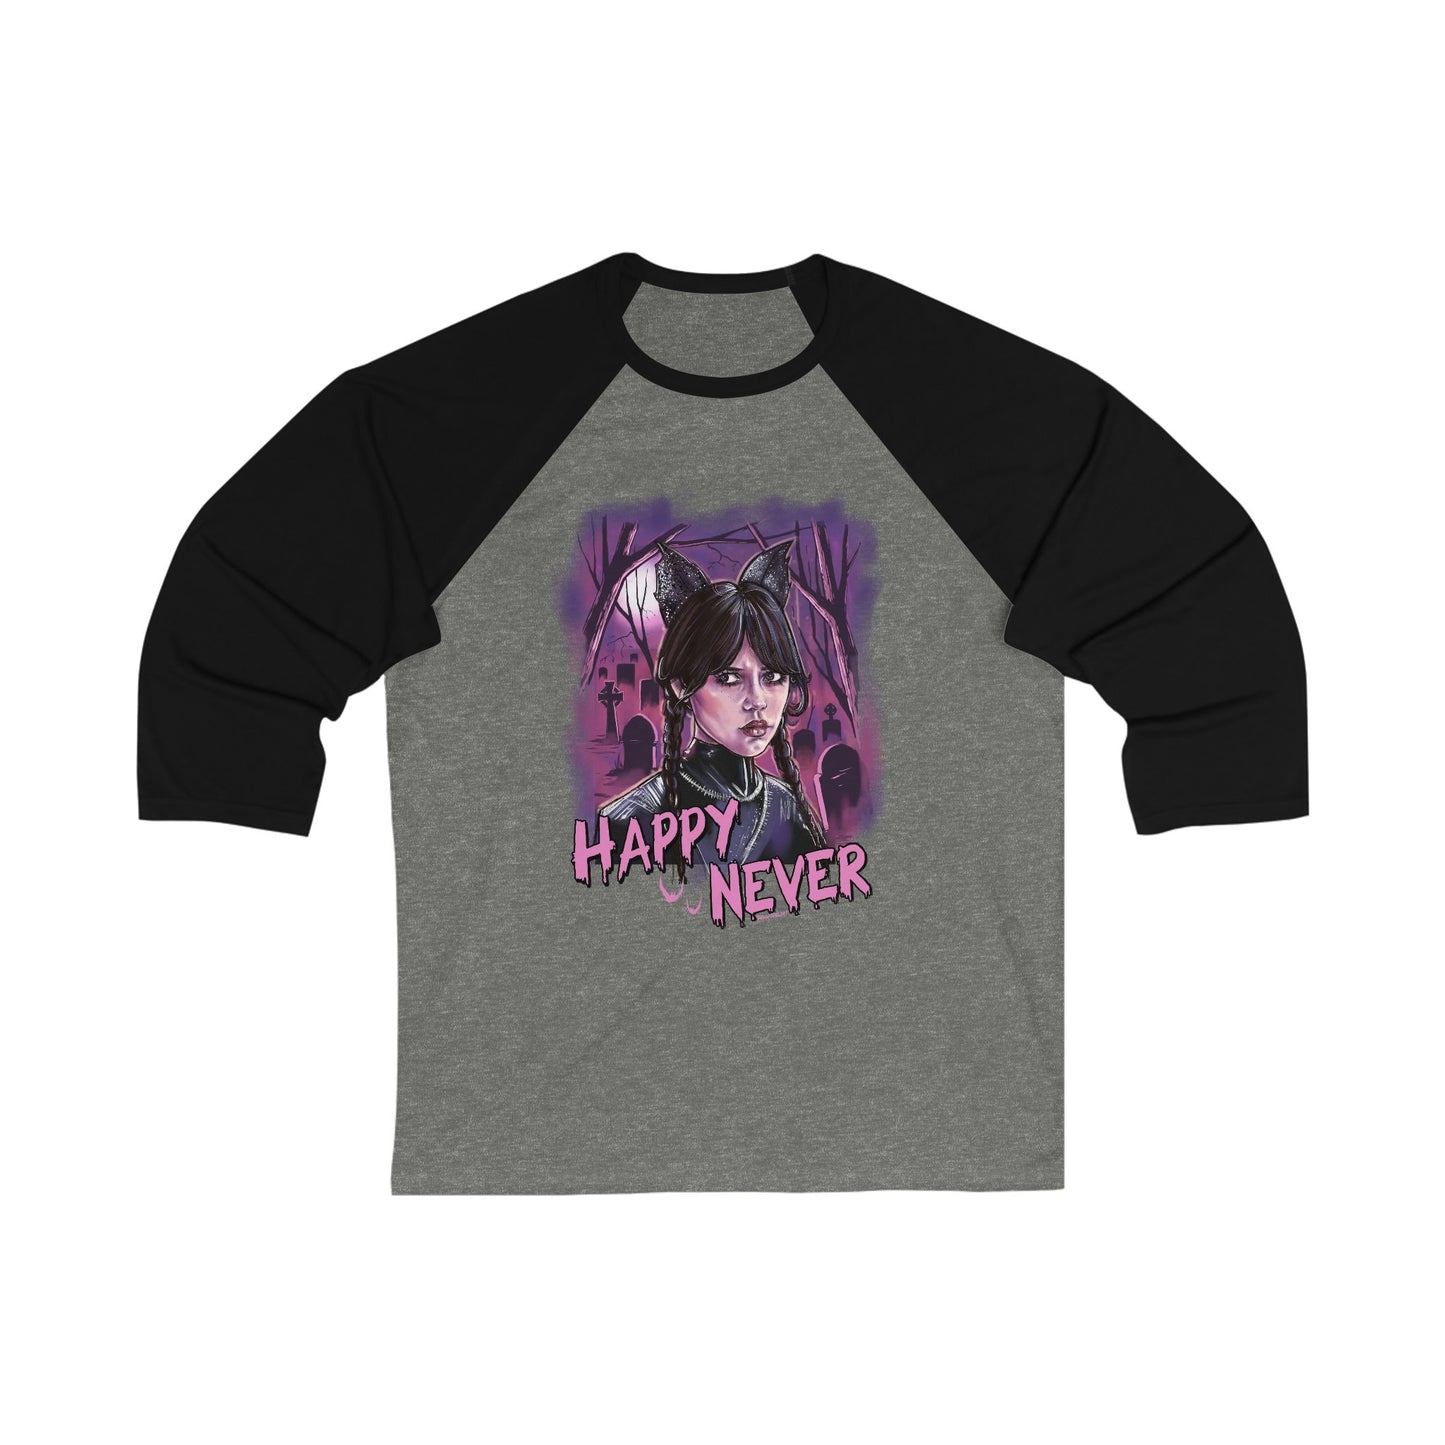 Wednesday shirt, Wednesday Addams, Wednesday merch, Wednesday print, Horror shirt, Addams family, Nevermore shirt